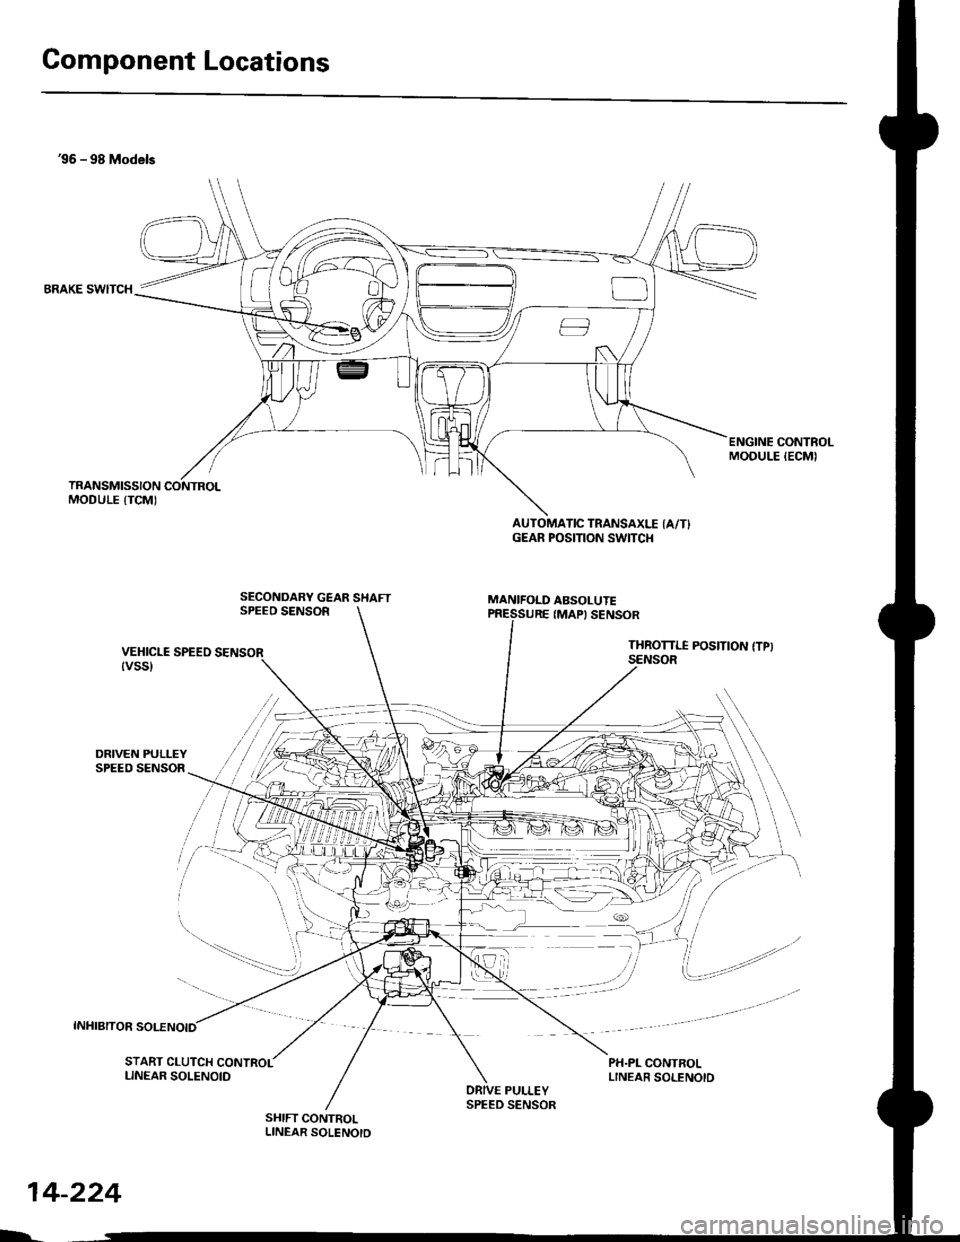 HONDA CIVIC 1997 6.G Workshop Manual Component Locations
36 - 98 Models
BRAKE SWITCH
DRIVEN PULLEYSPEED SENSOR
INHIBITOR SOLENOID
ENGINE CONTROLMODULE IECMI
SECONDARY GEAR SHAFTSPEEO SENSOR
AUTOMATIC TRANSAXLE (A/T}GEAR POSITION SWITCI{
